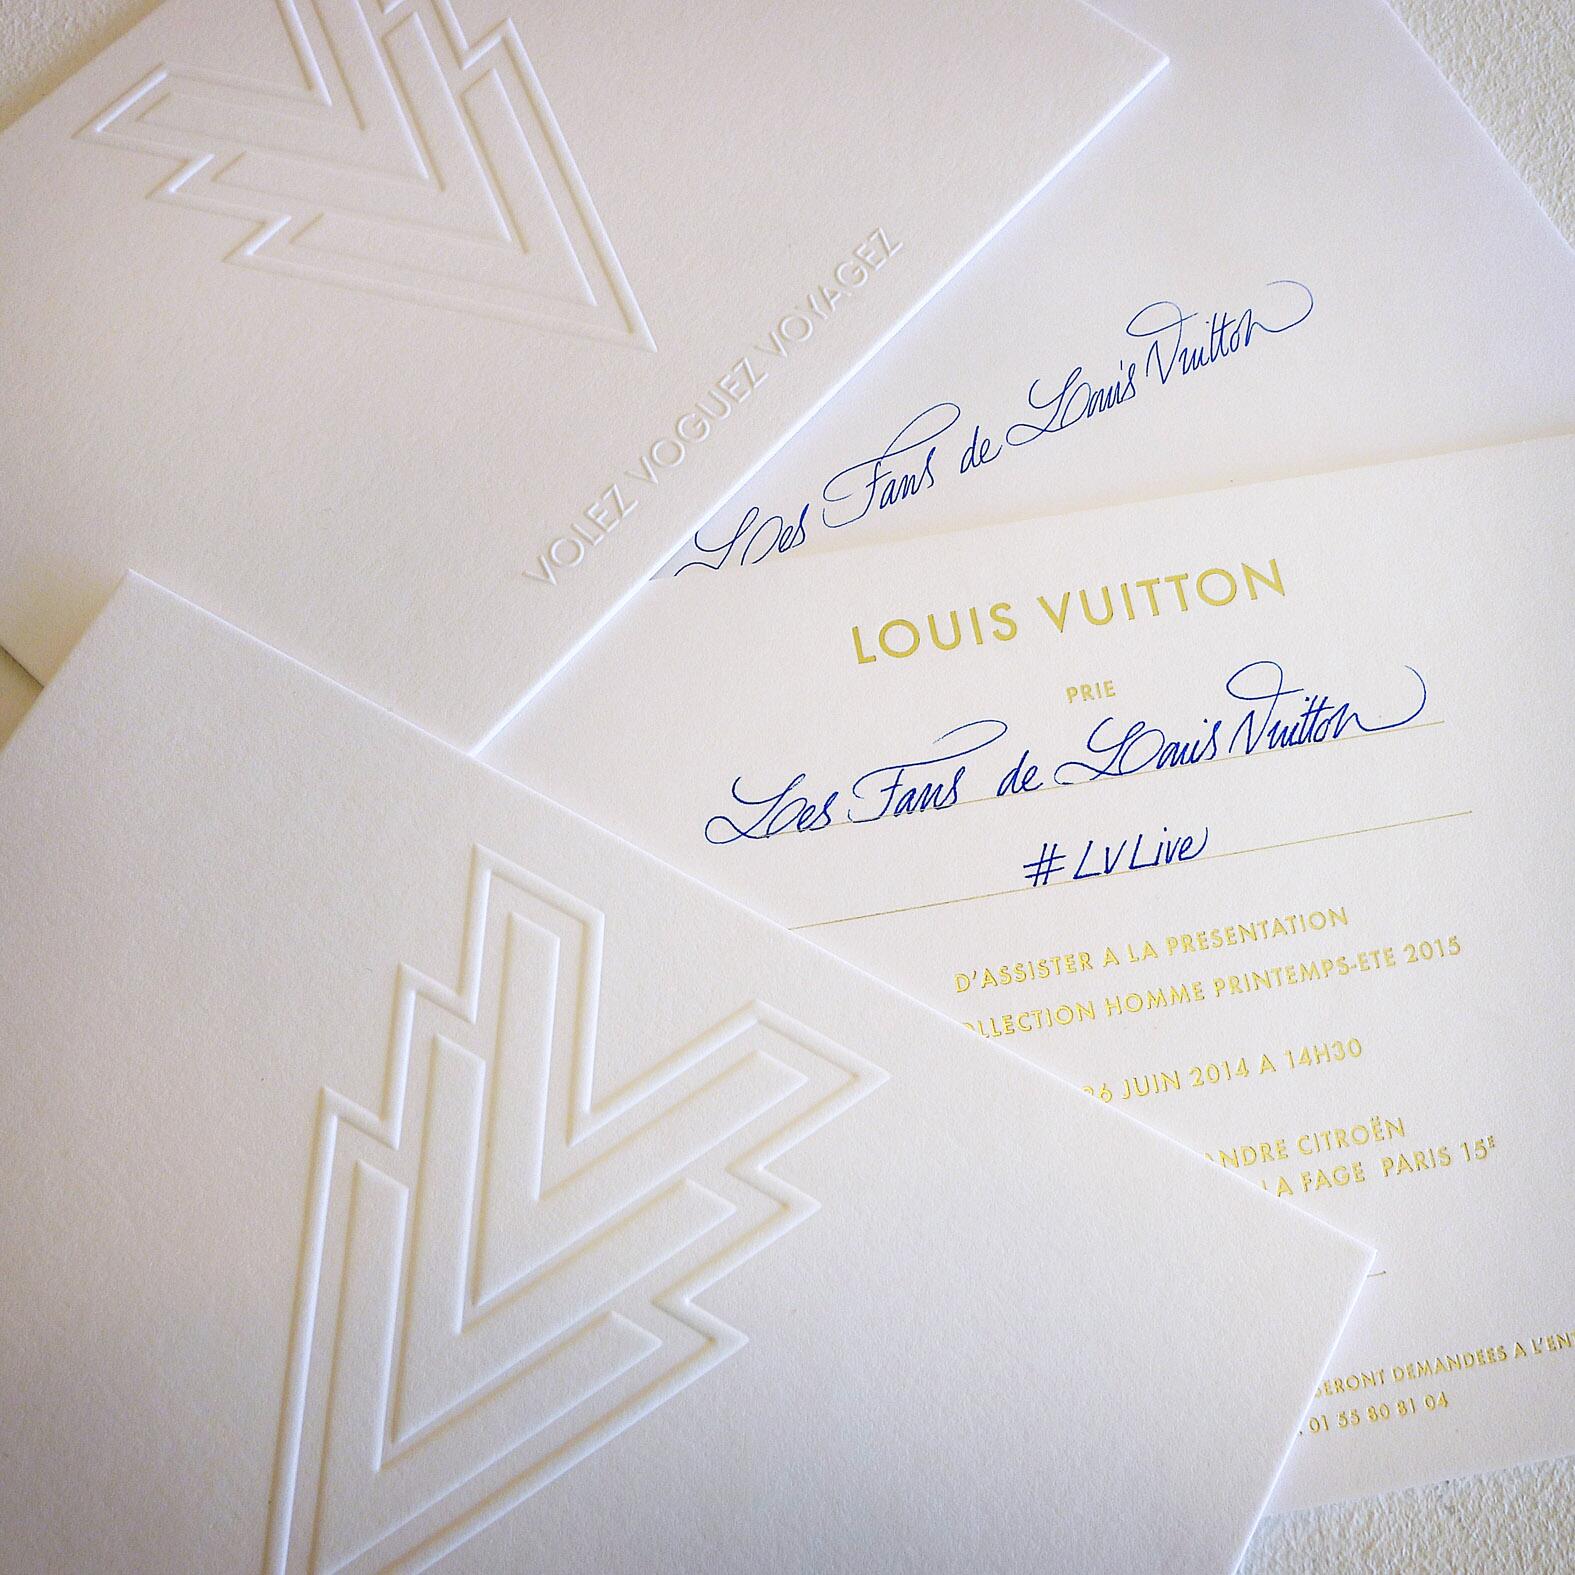 Louis Vuitton on X: Invitations to the #LouisVuitton Men's Show